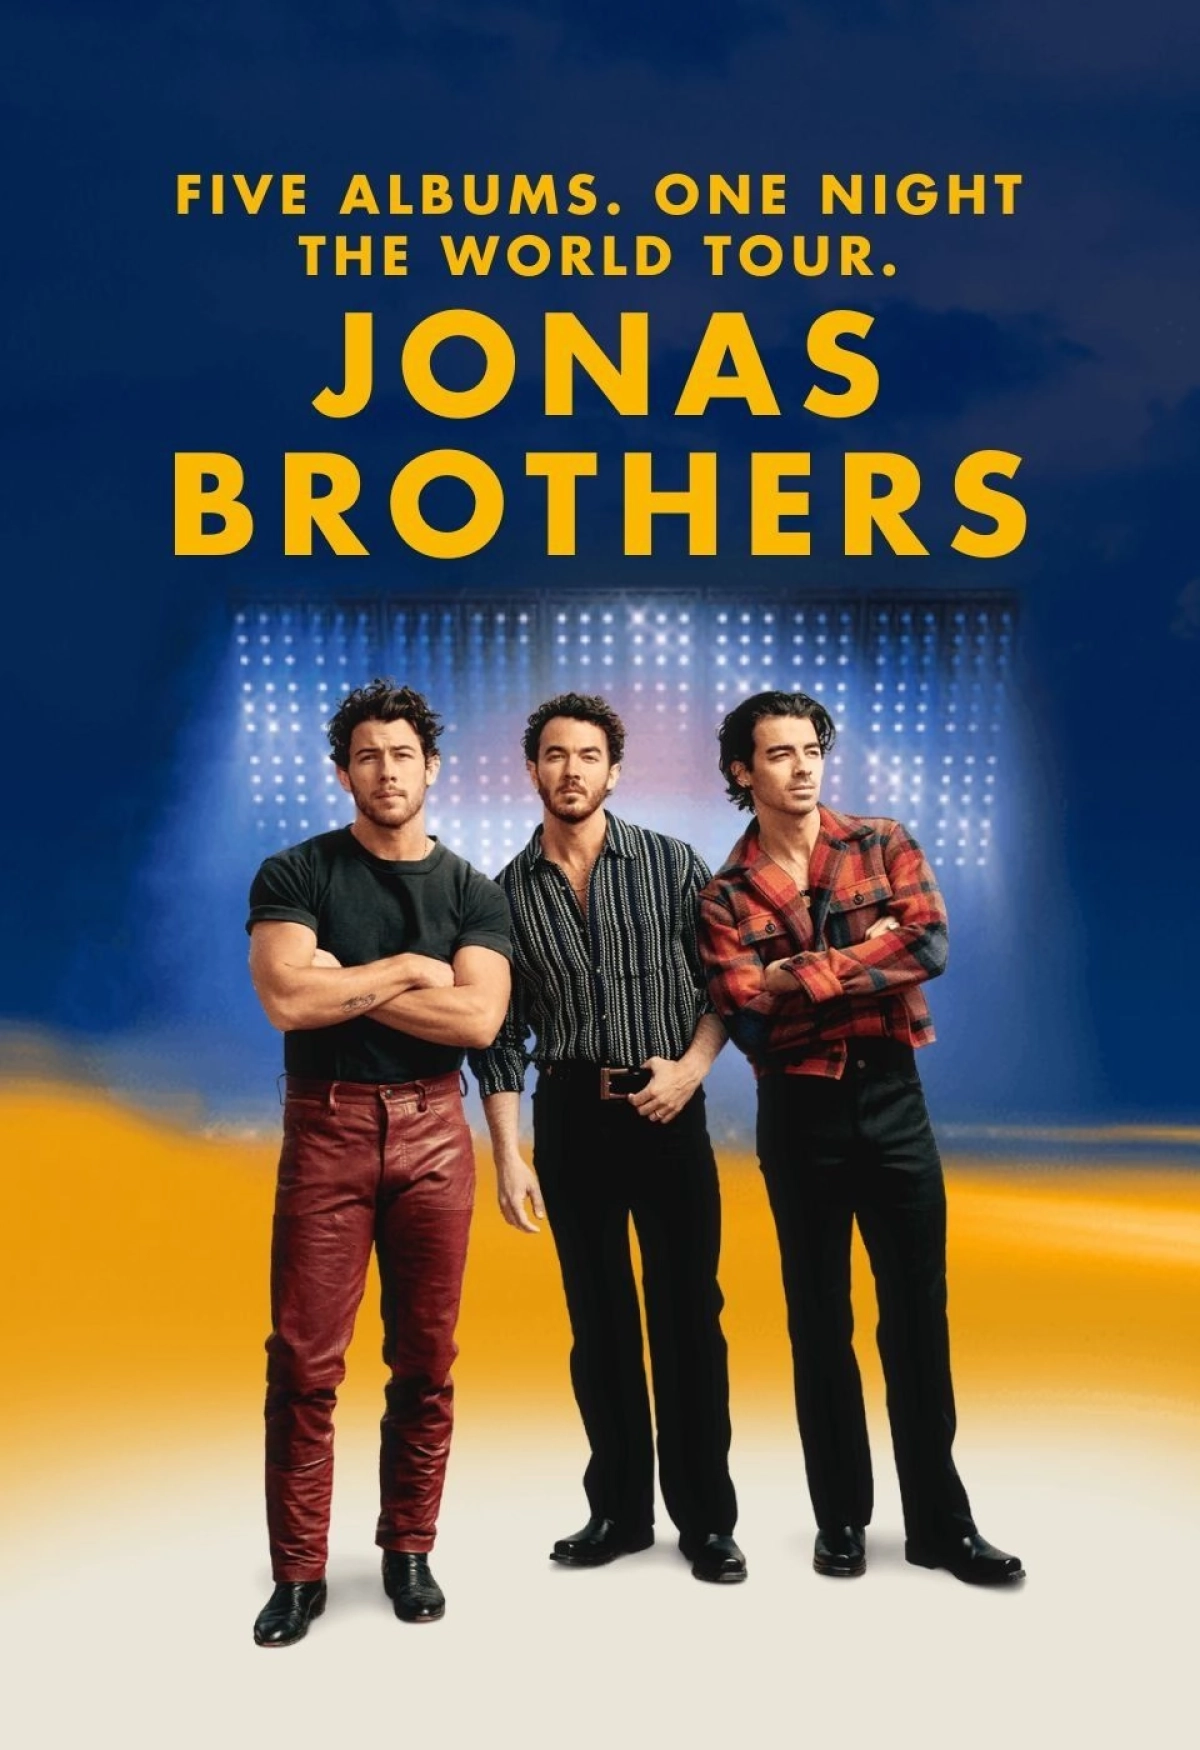 Jonas Brothers at Wiener Stadthalle Tickets